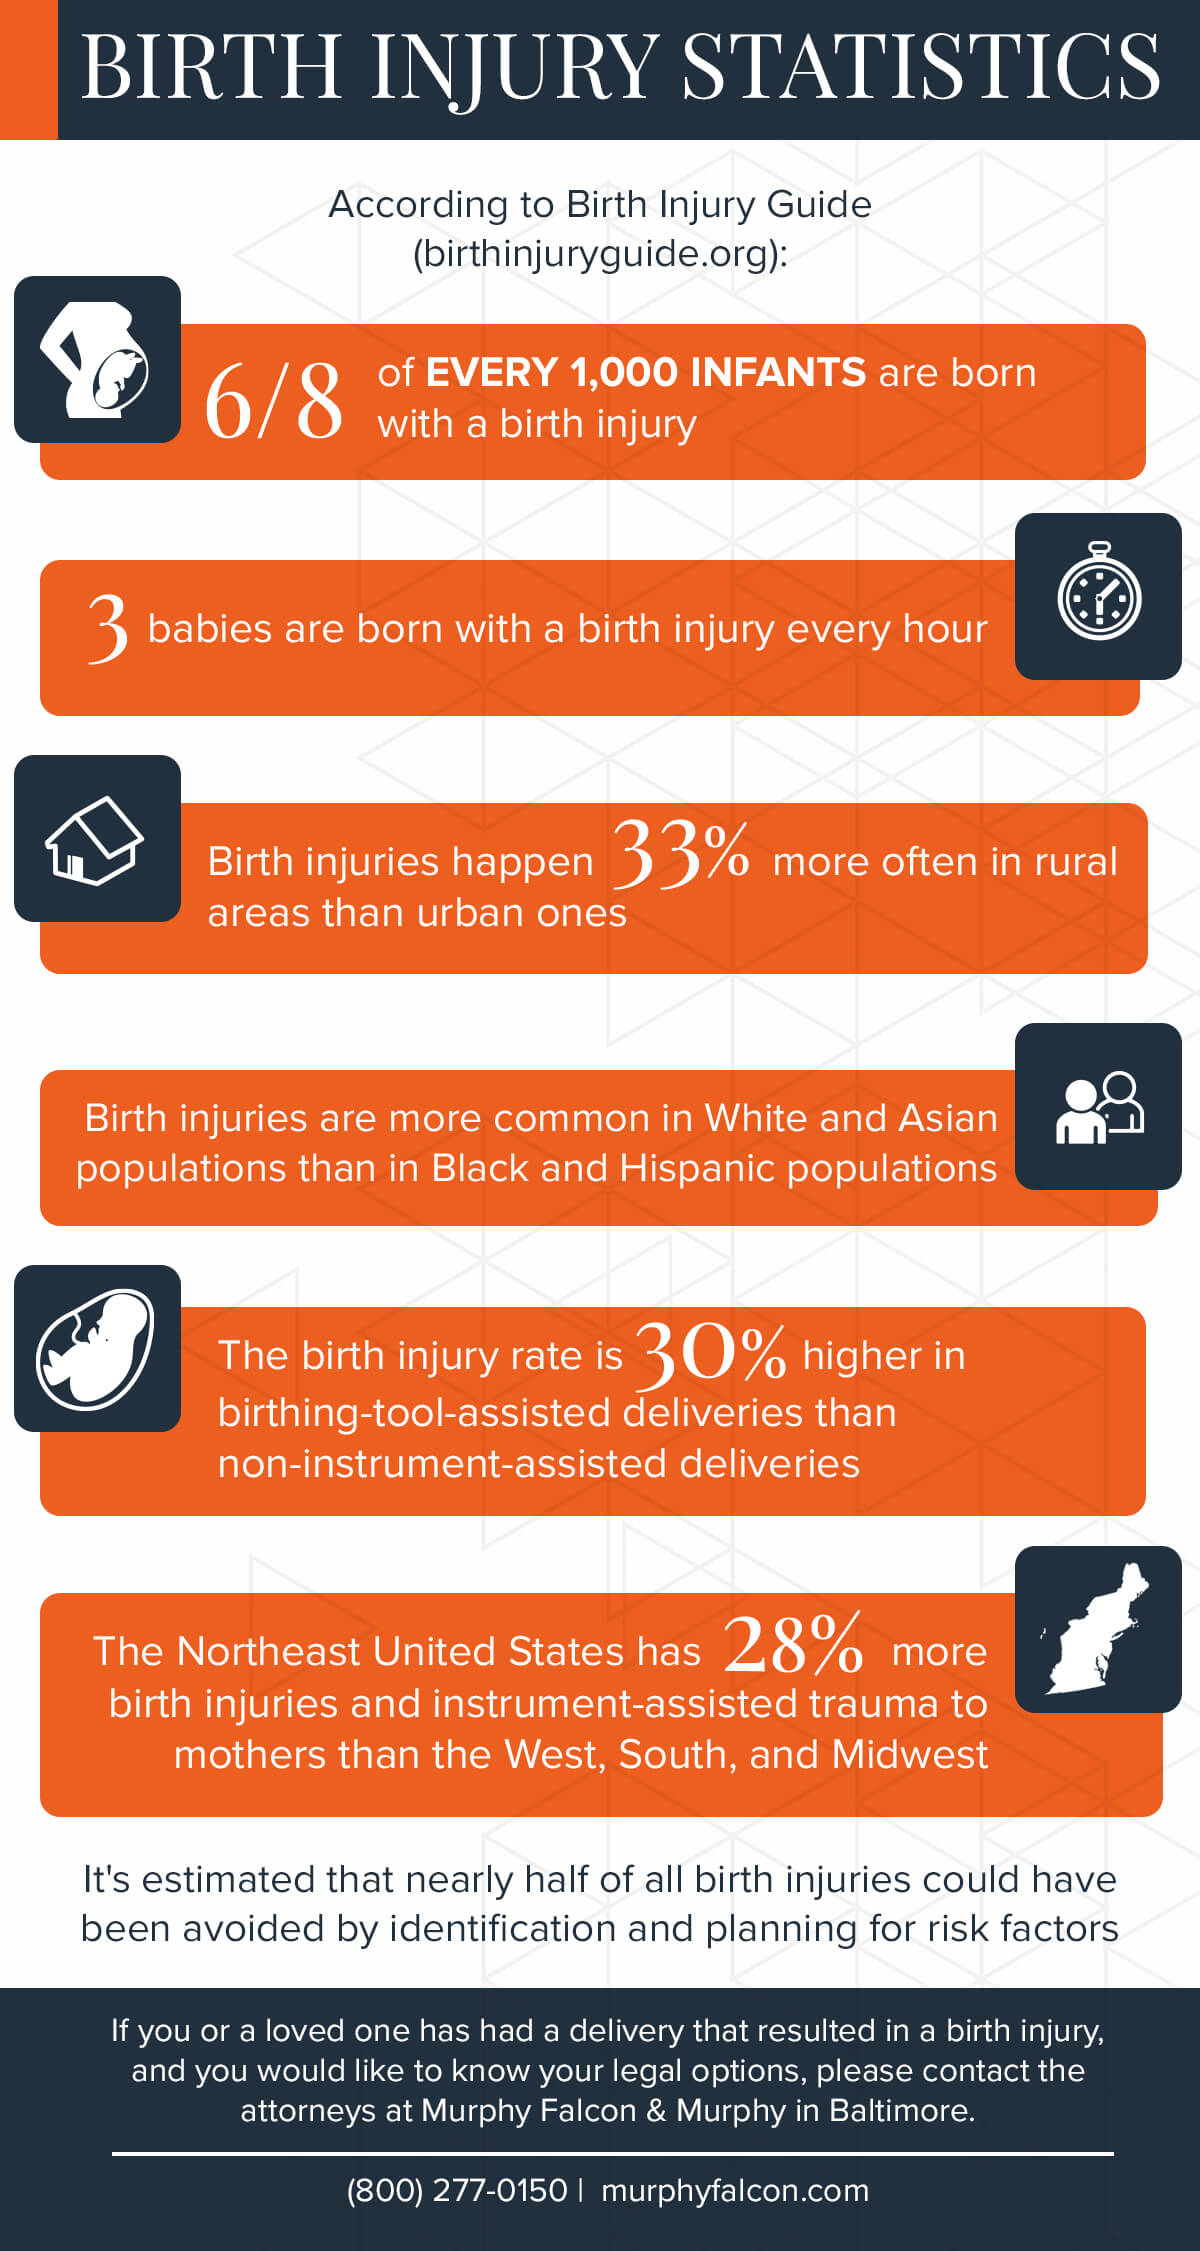 orange blue and white infographic detailing birth injury statistics